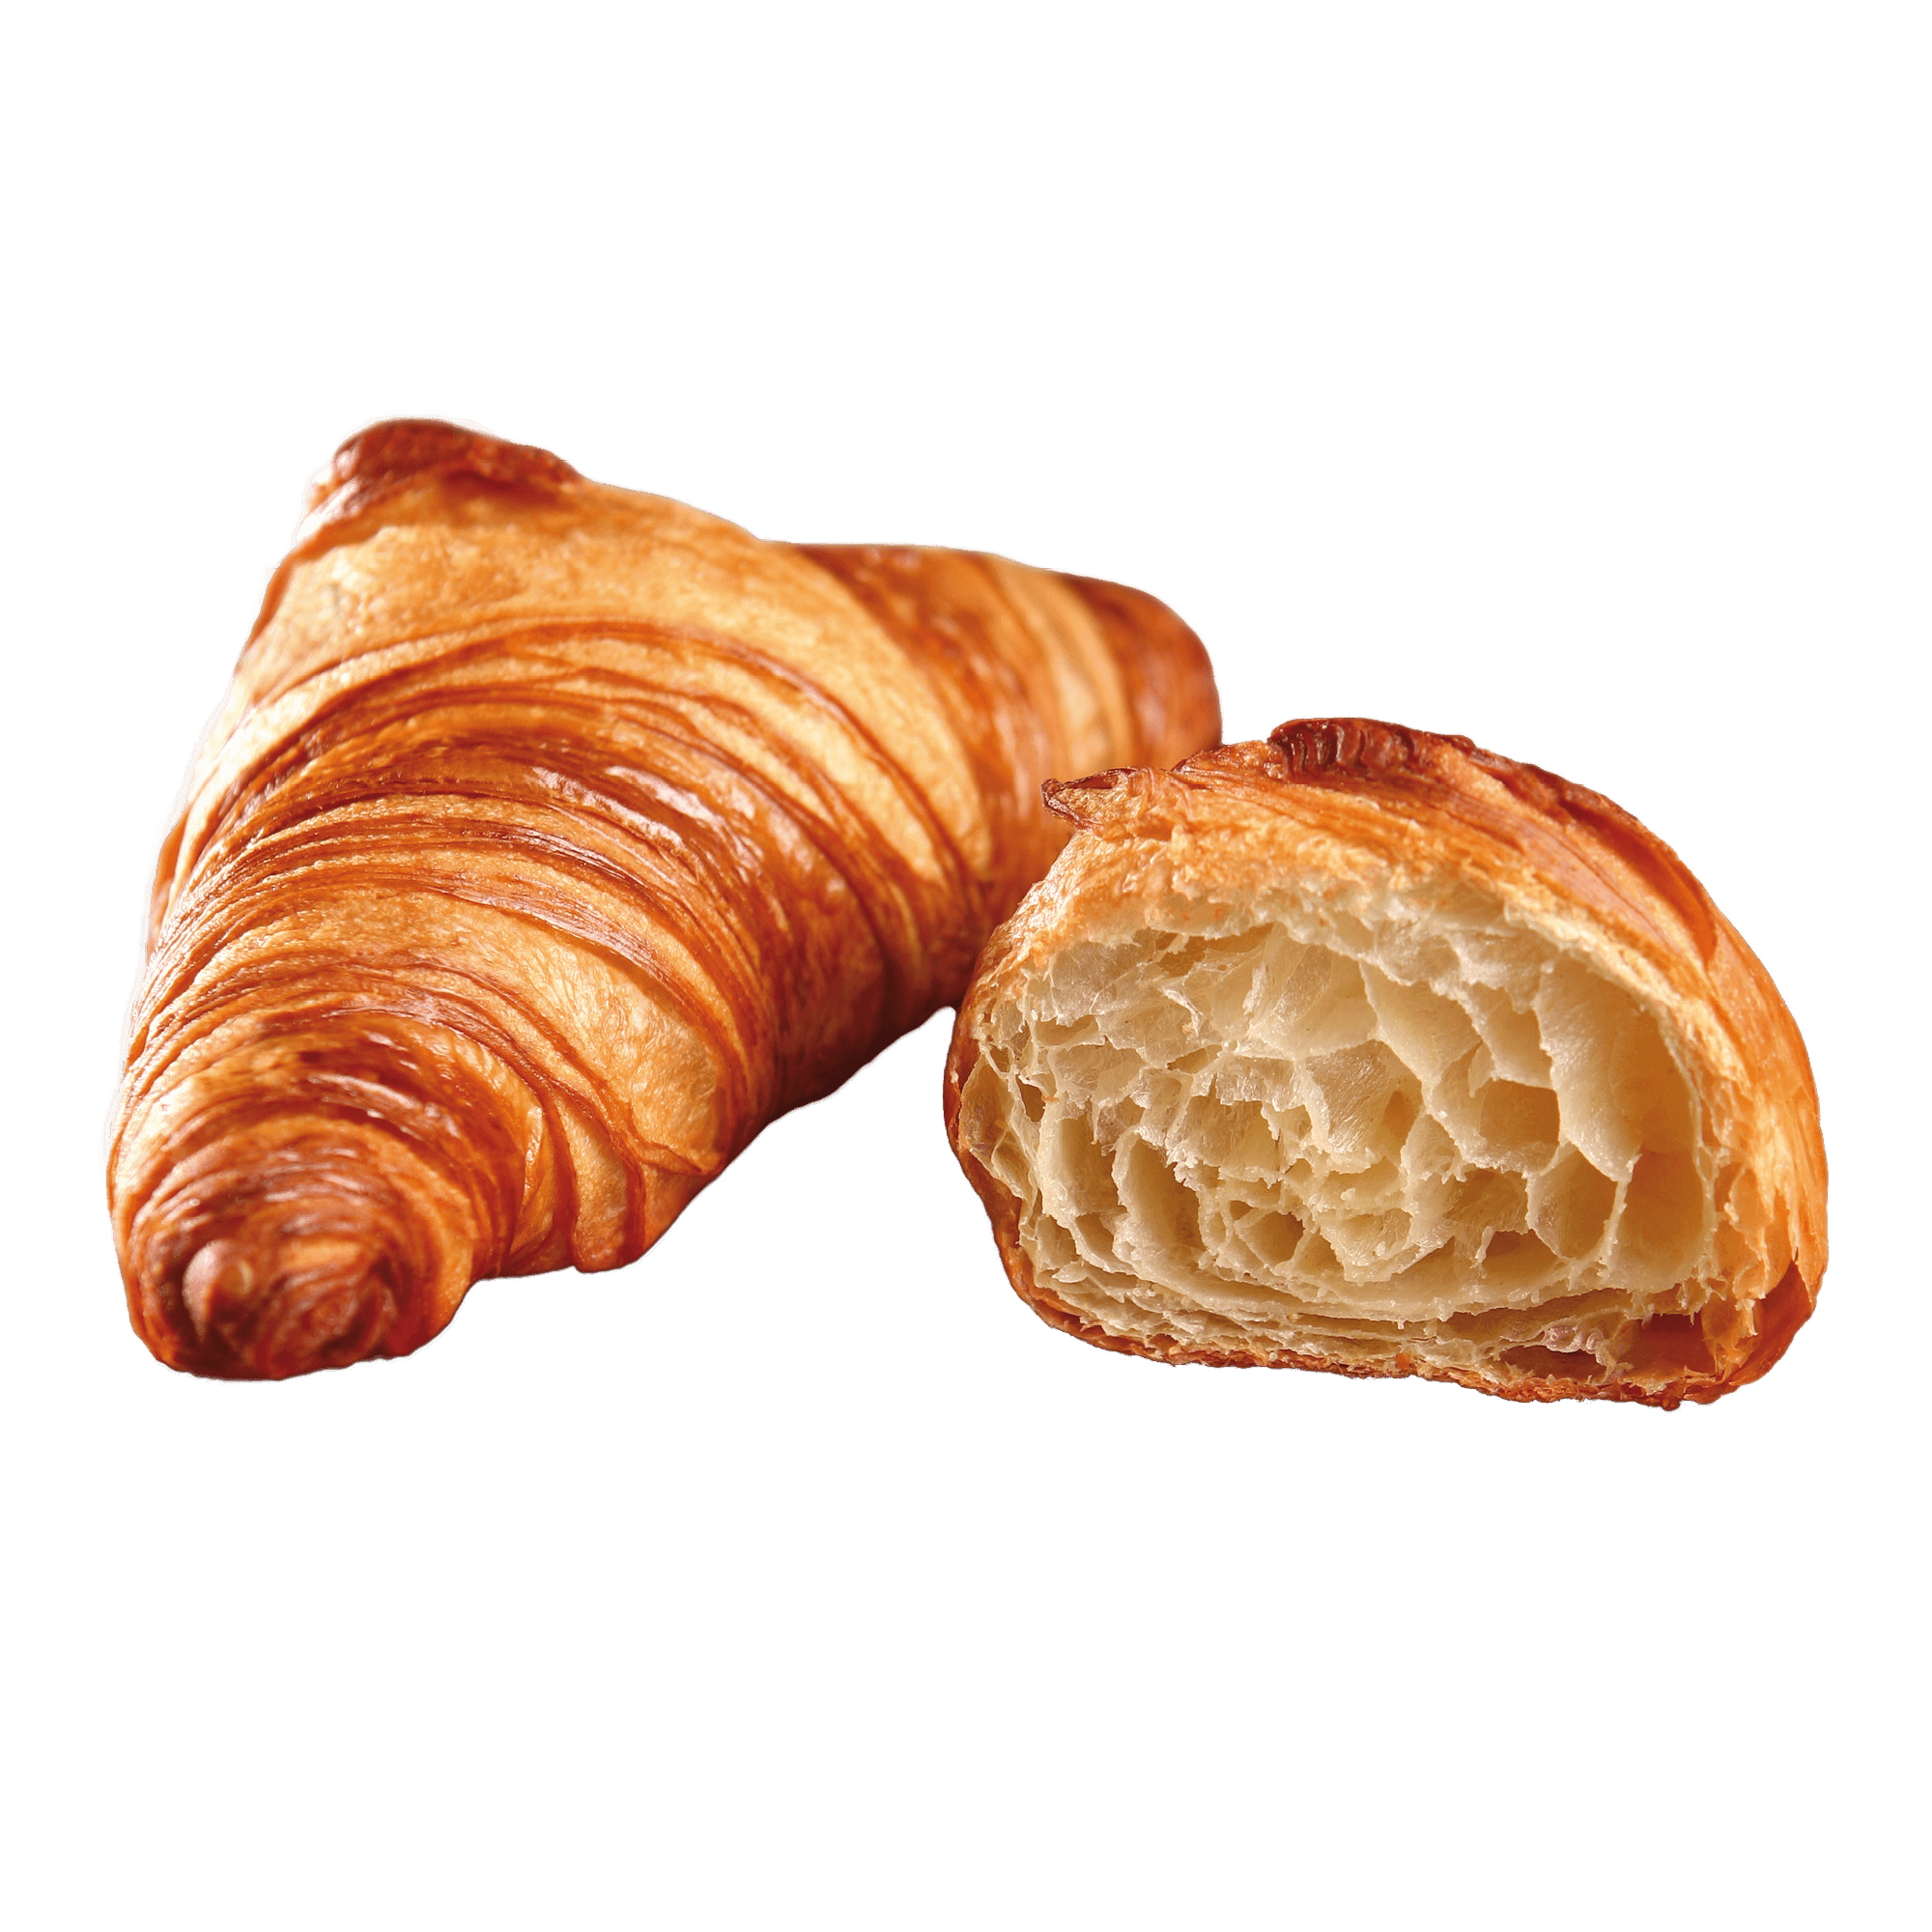 Large Butter HT Croissant oz Gourmet 2.8 — Savory